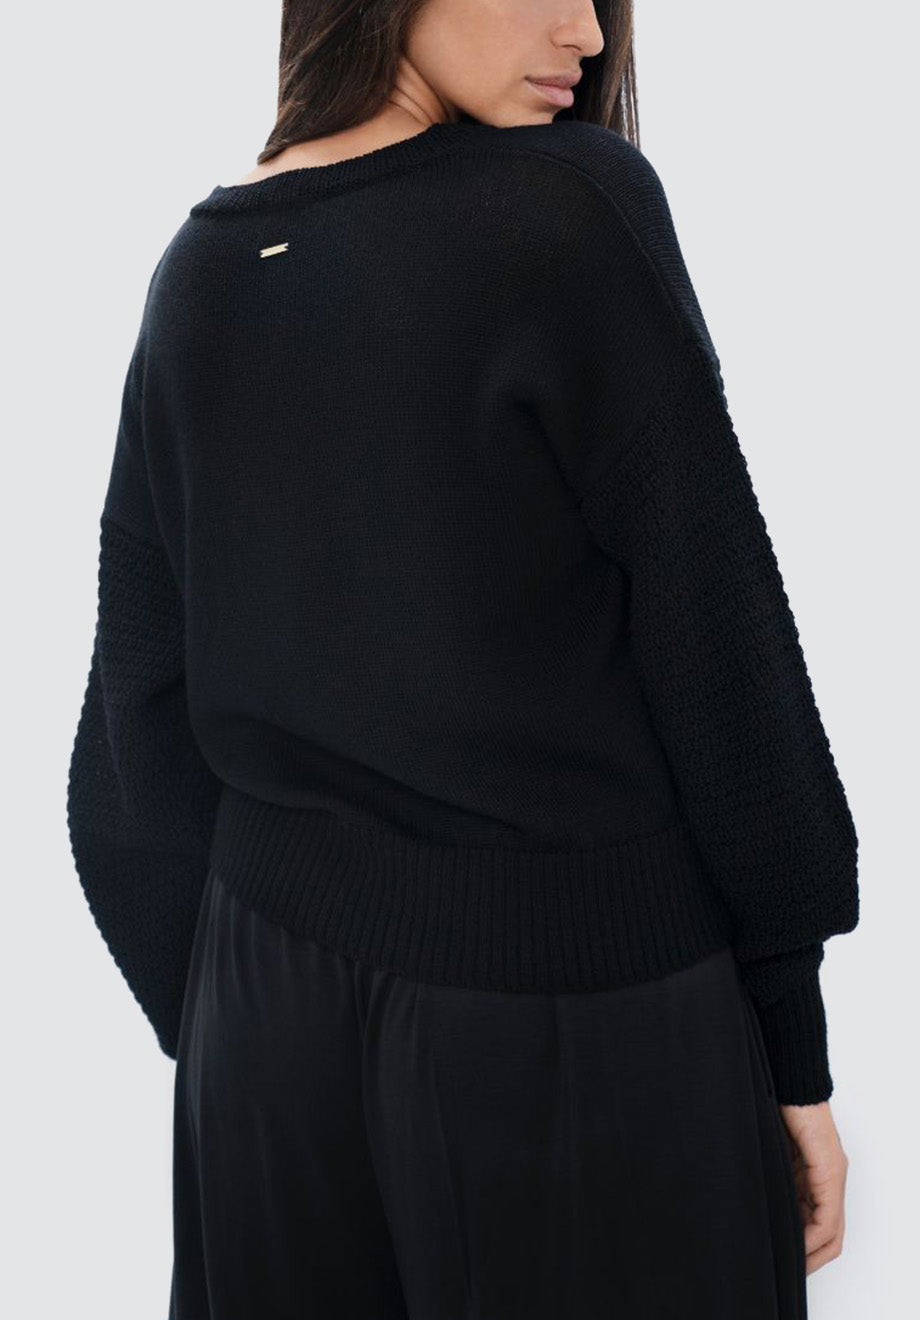 Nagano MMJ - V-Neck Sweater | Licorice